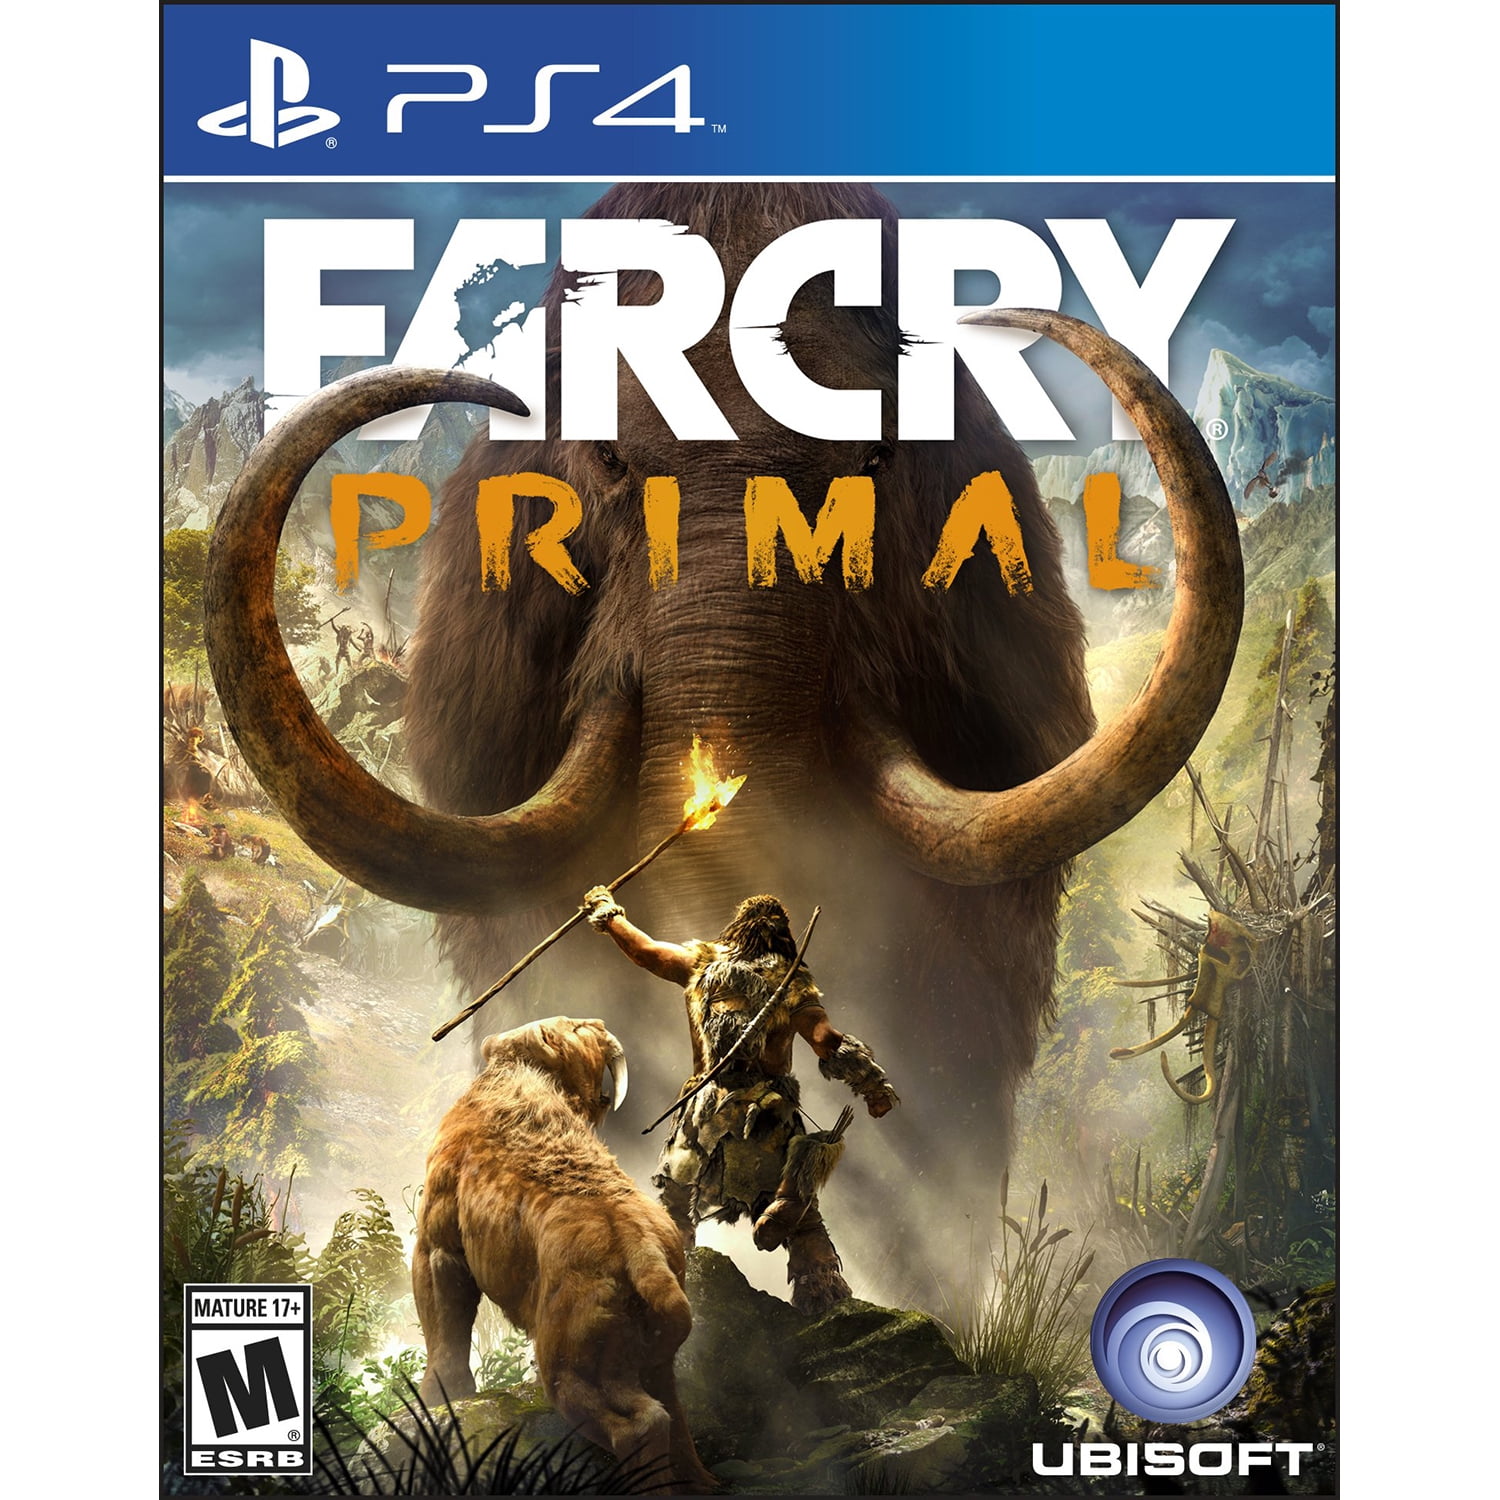 metacritic on X: Far Cry 5 [PS4 - 81]  Far Cry  Primal [PS4 - 76]  Far Cry 4 [PS4 - 85]   Far Cry 3 [360 - 91]  Far